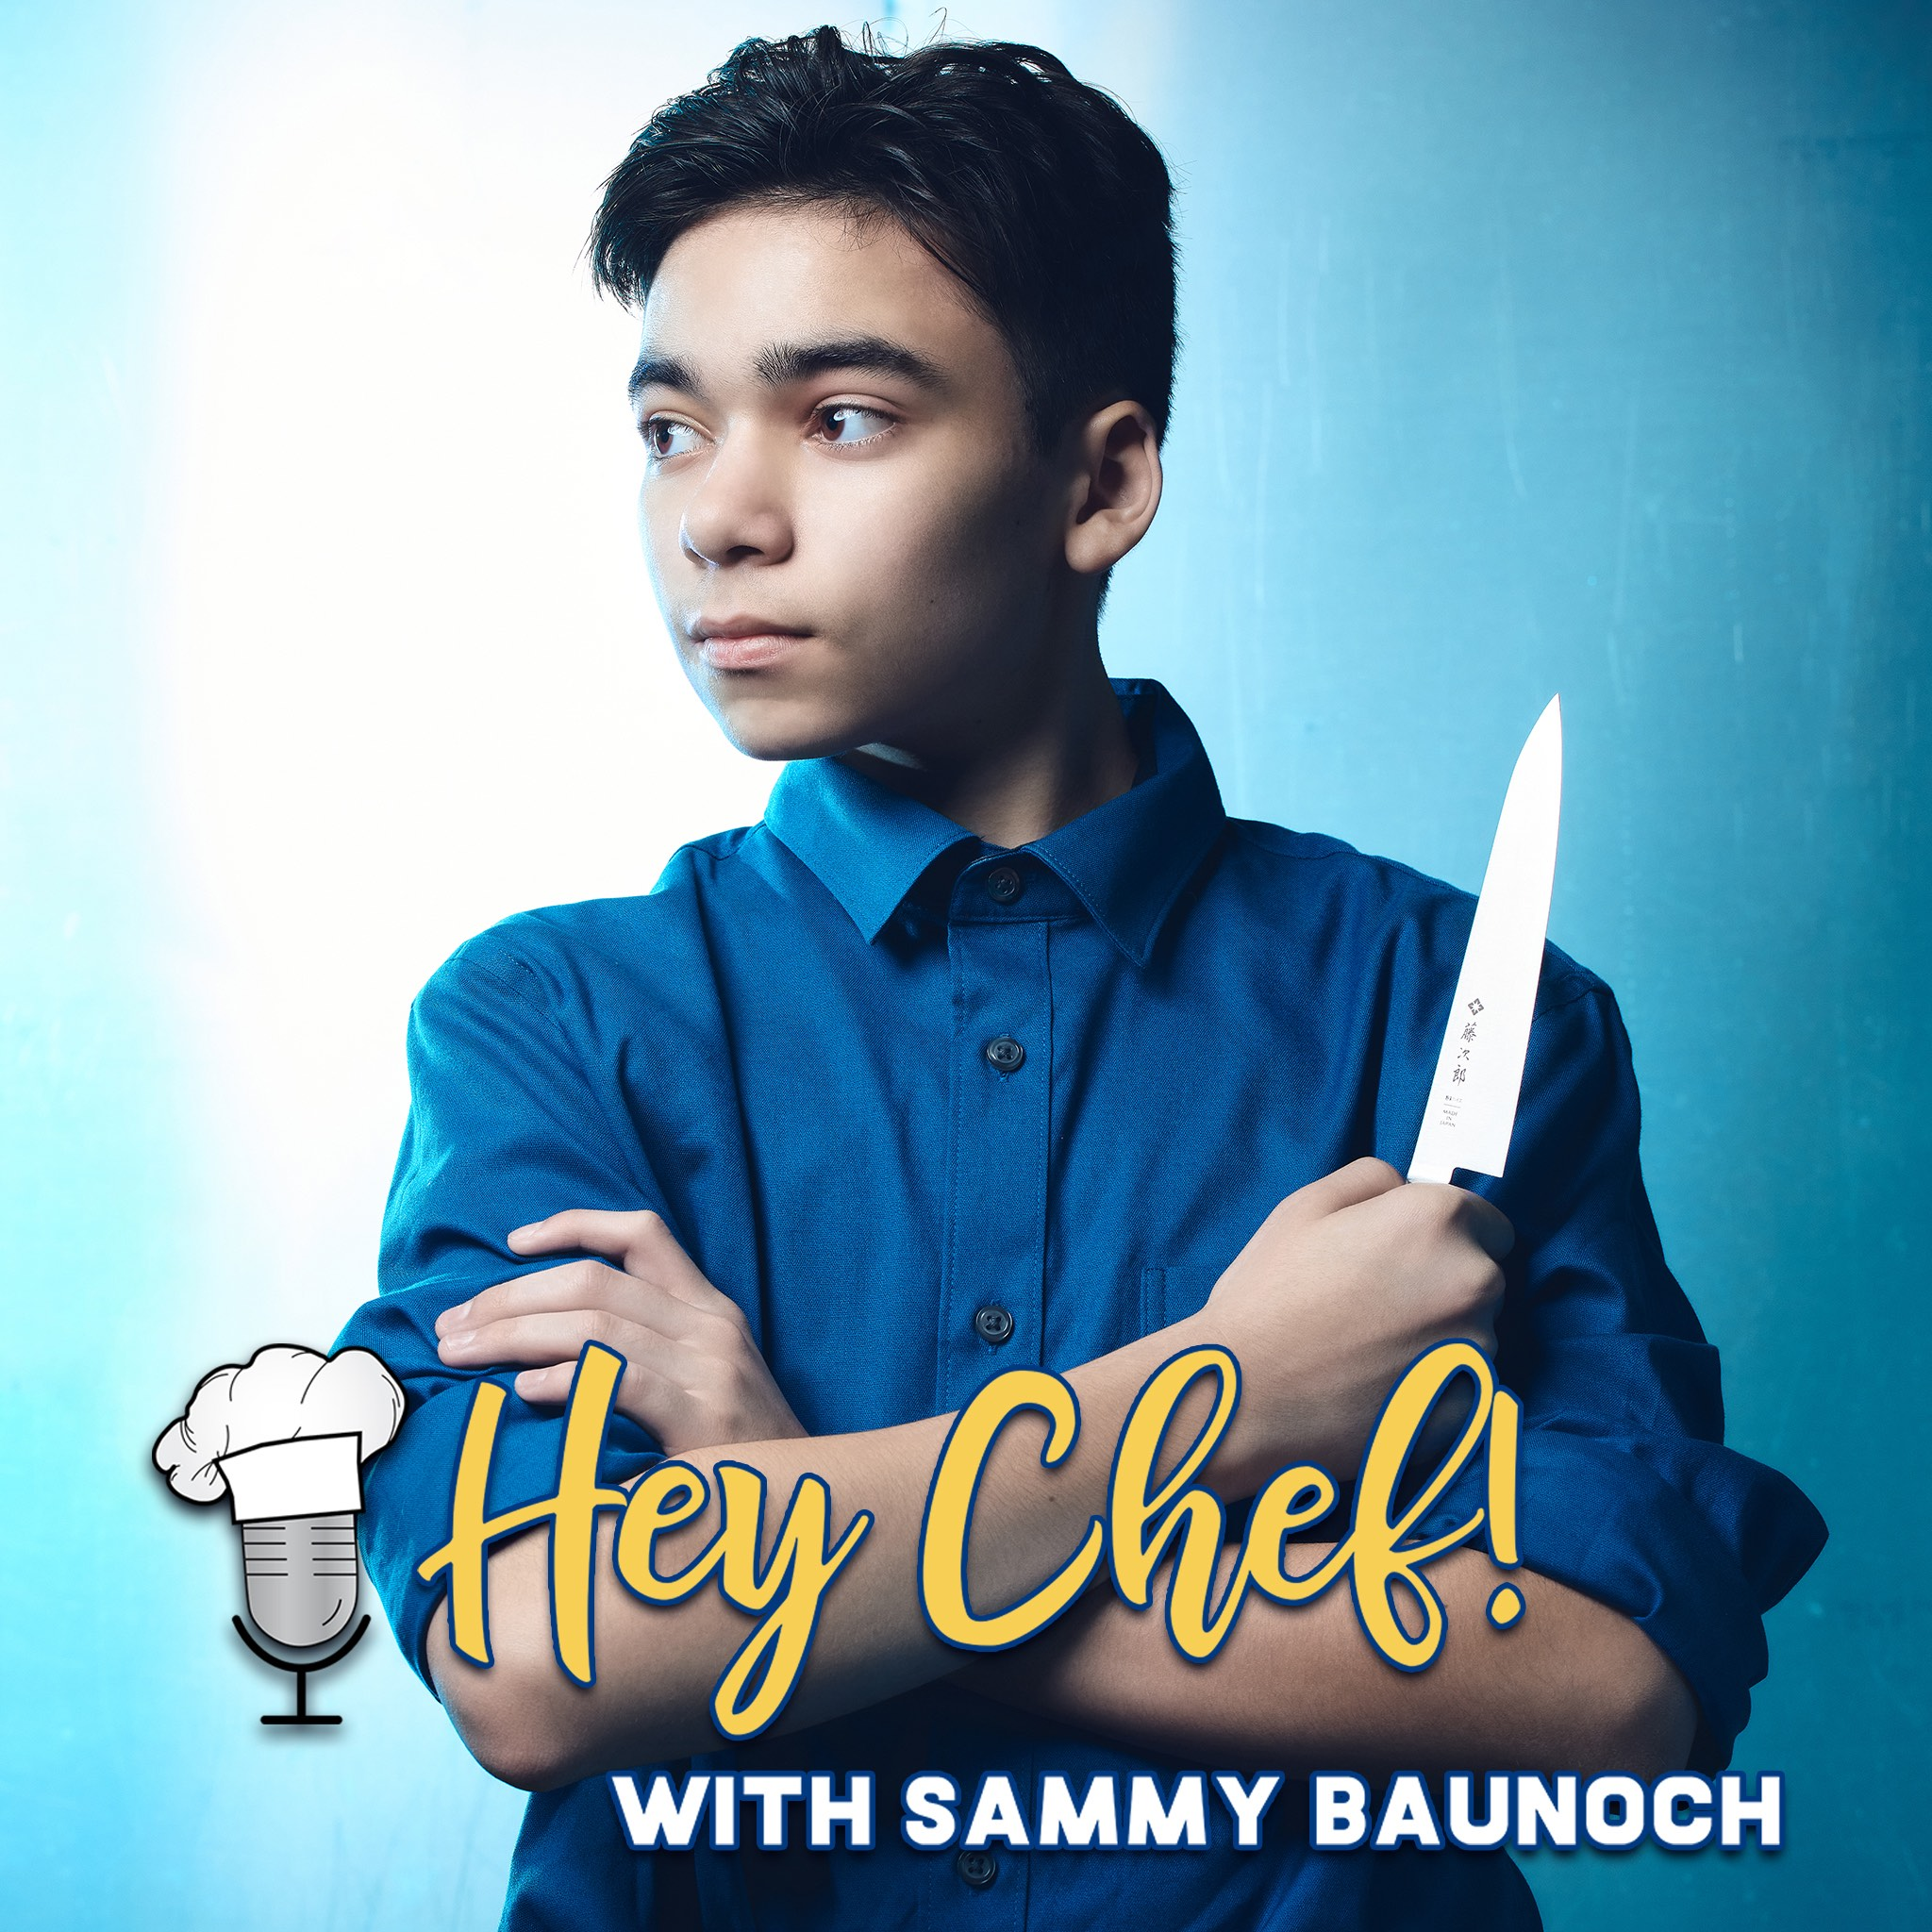 Hey Chef! Trailer